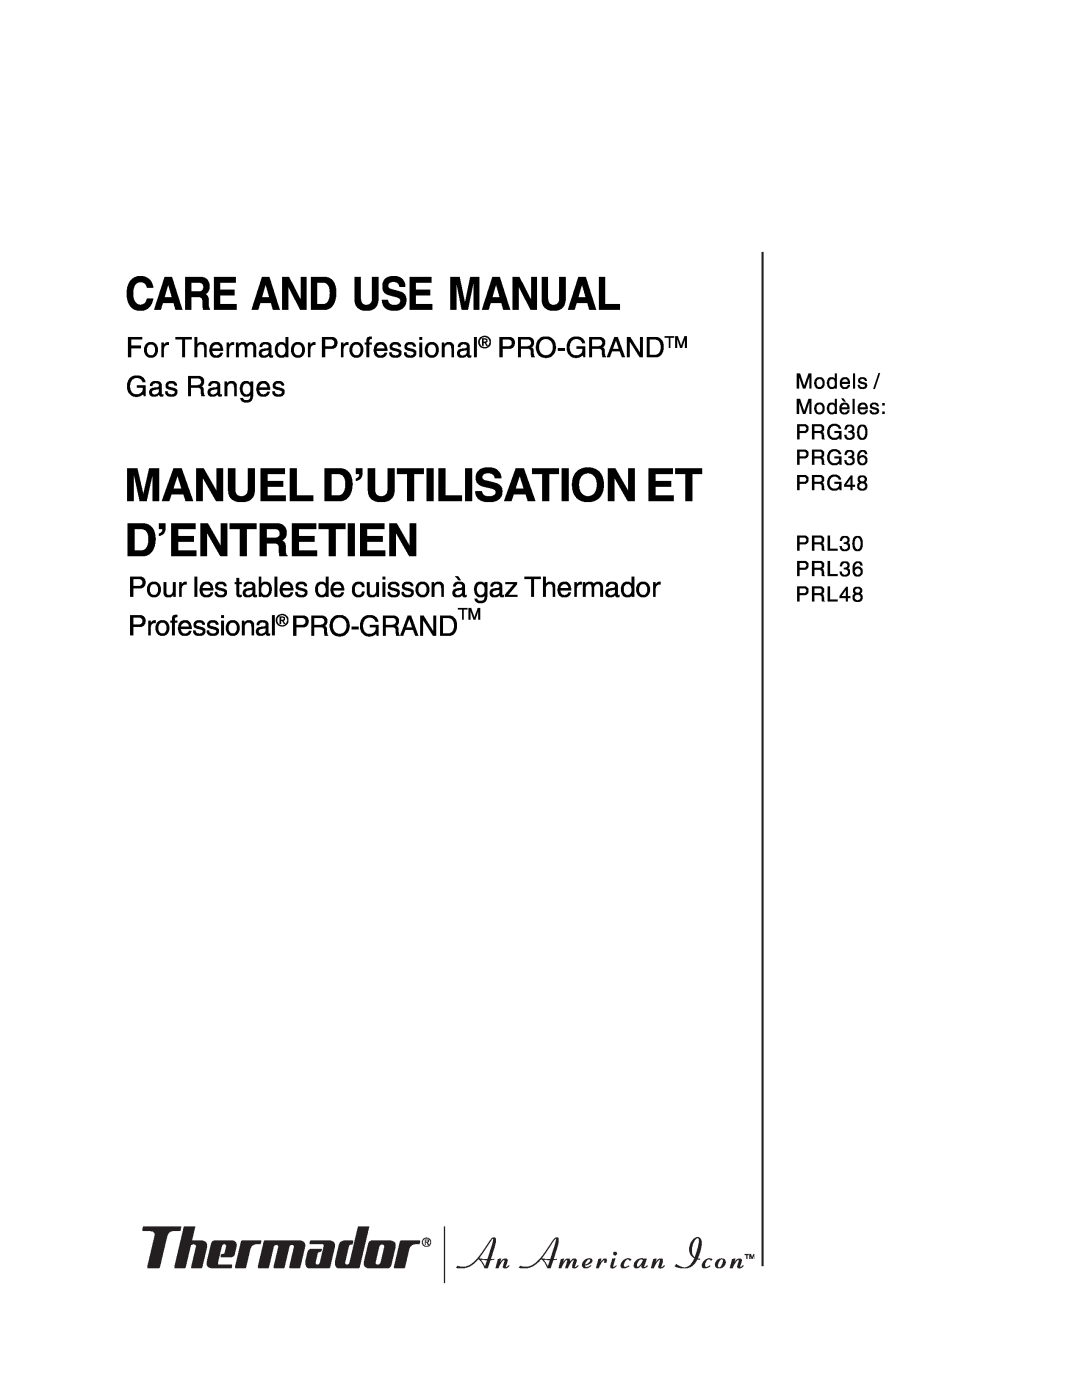 Thermador PRG30, PRL36, PRL30 manual Care And Use Manual, Guide Dutilisation Et Dentretien, Manual De Uso Y Cuidado 